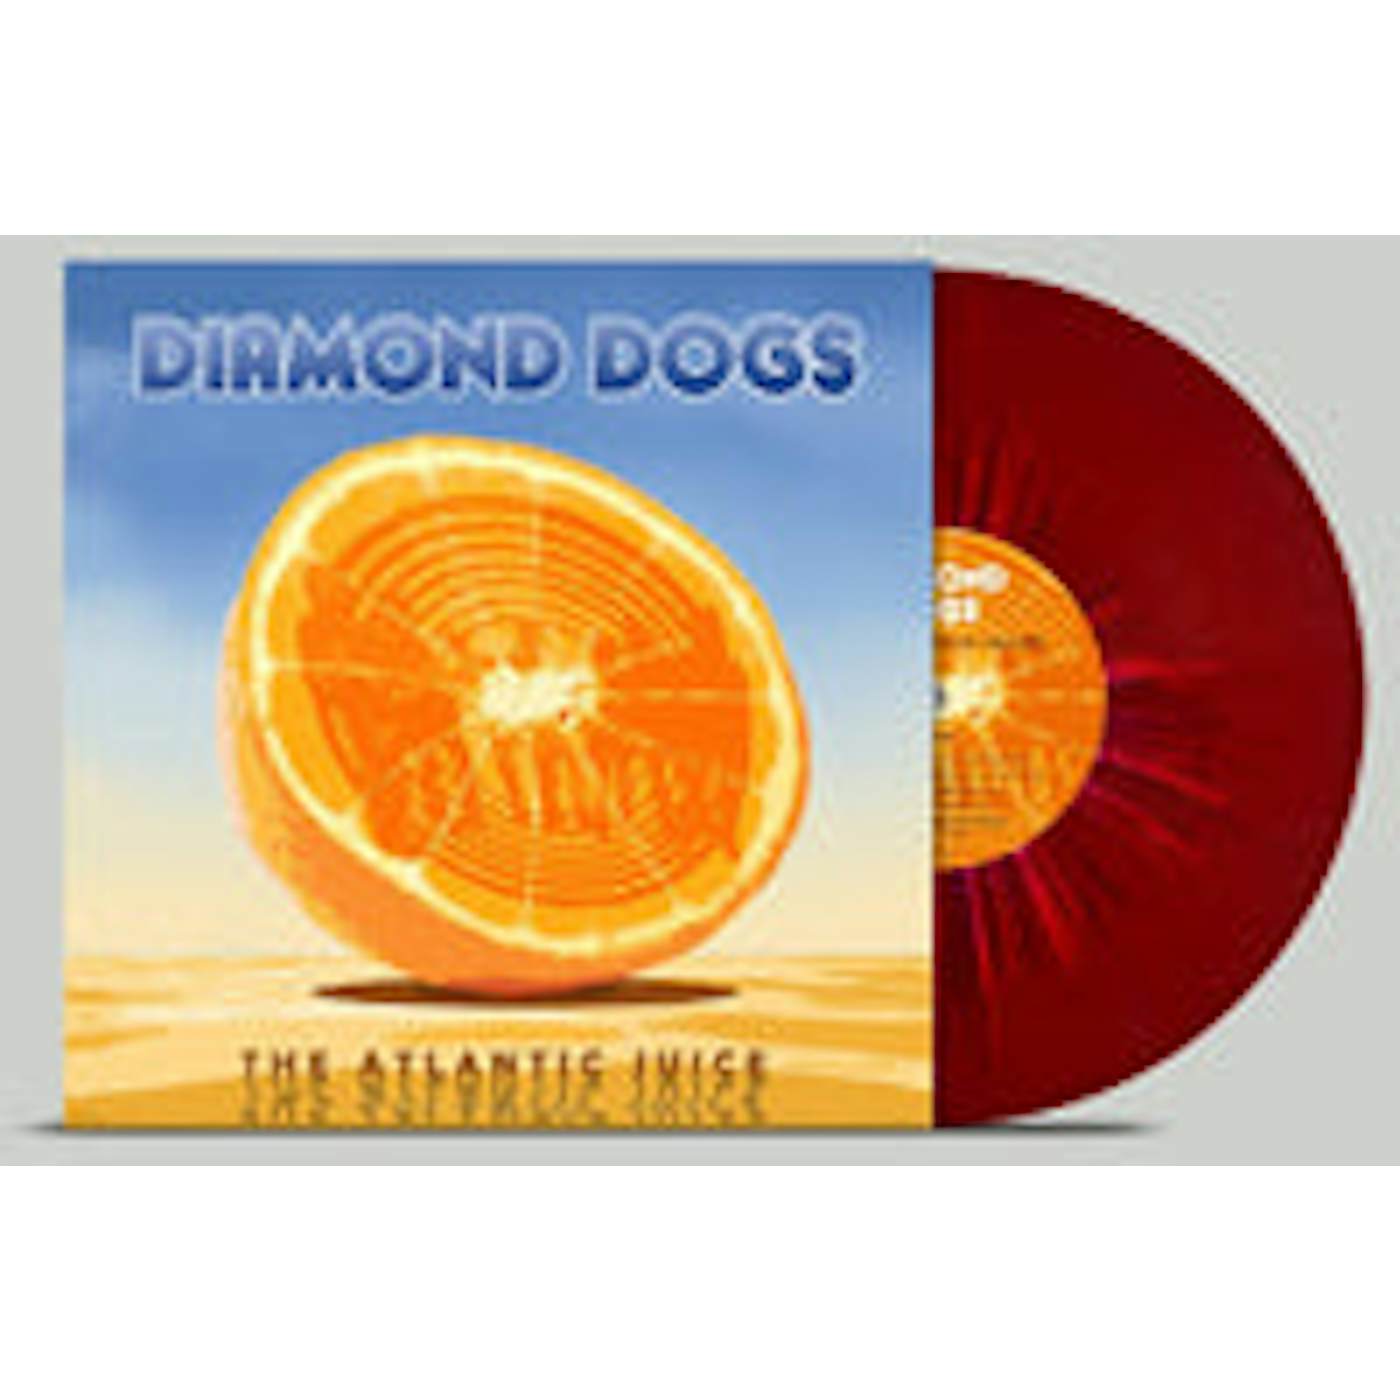 Diamond Dogs LP - Atlantic Juice (Marble Splatter Vinyl)